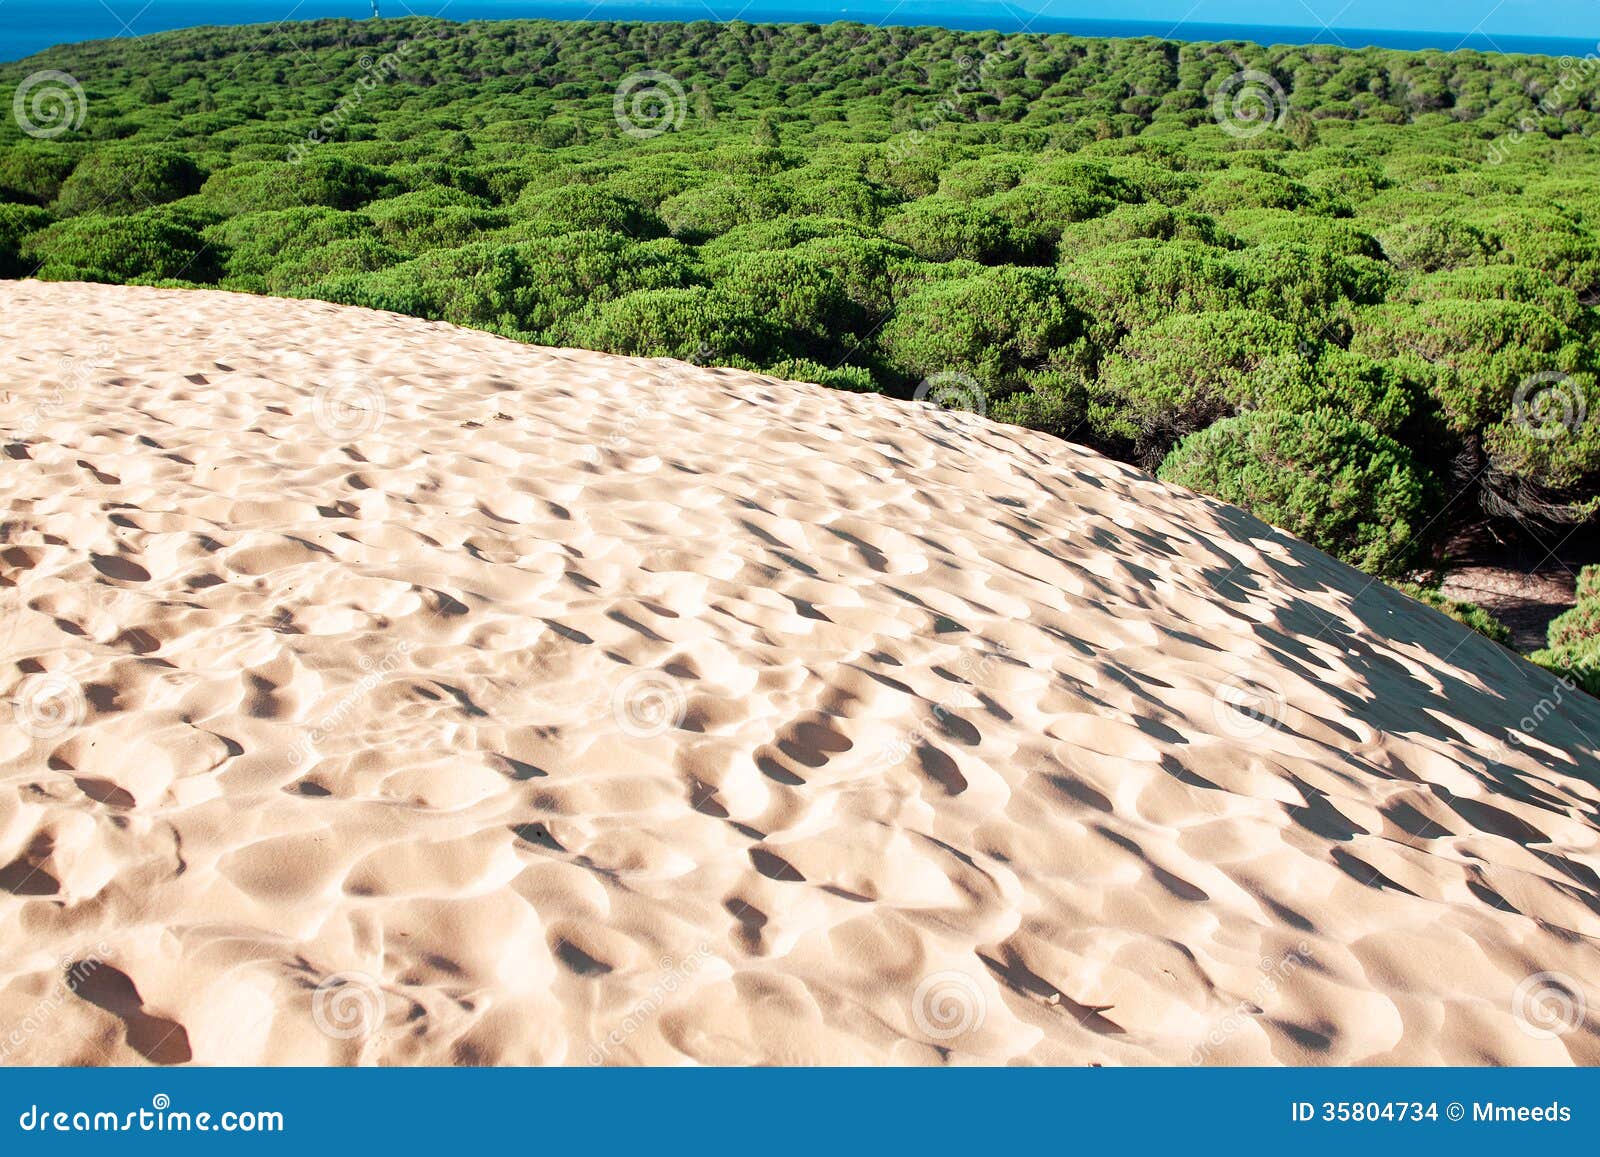 sand dune of bolonia beach, province cadiz, andalucia, spine